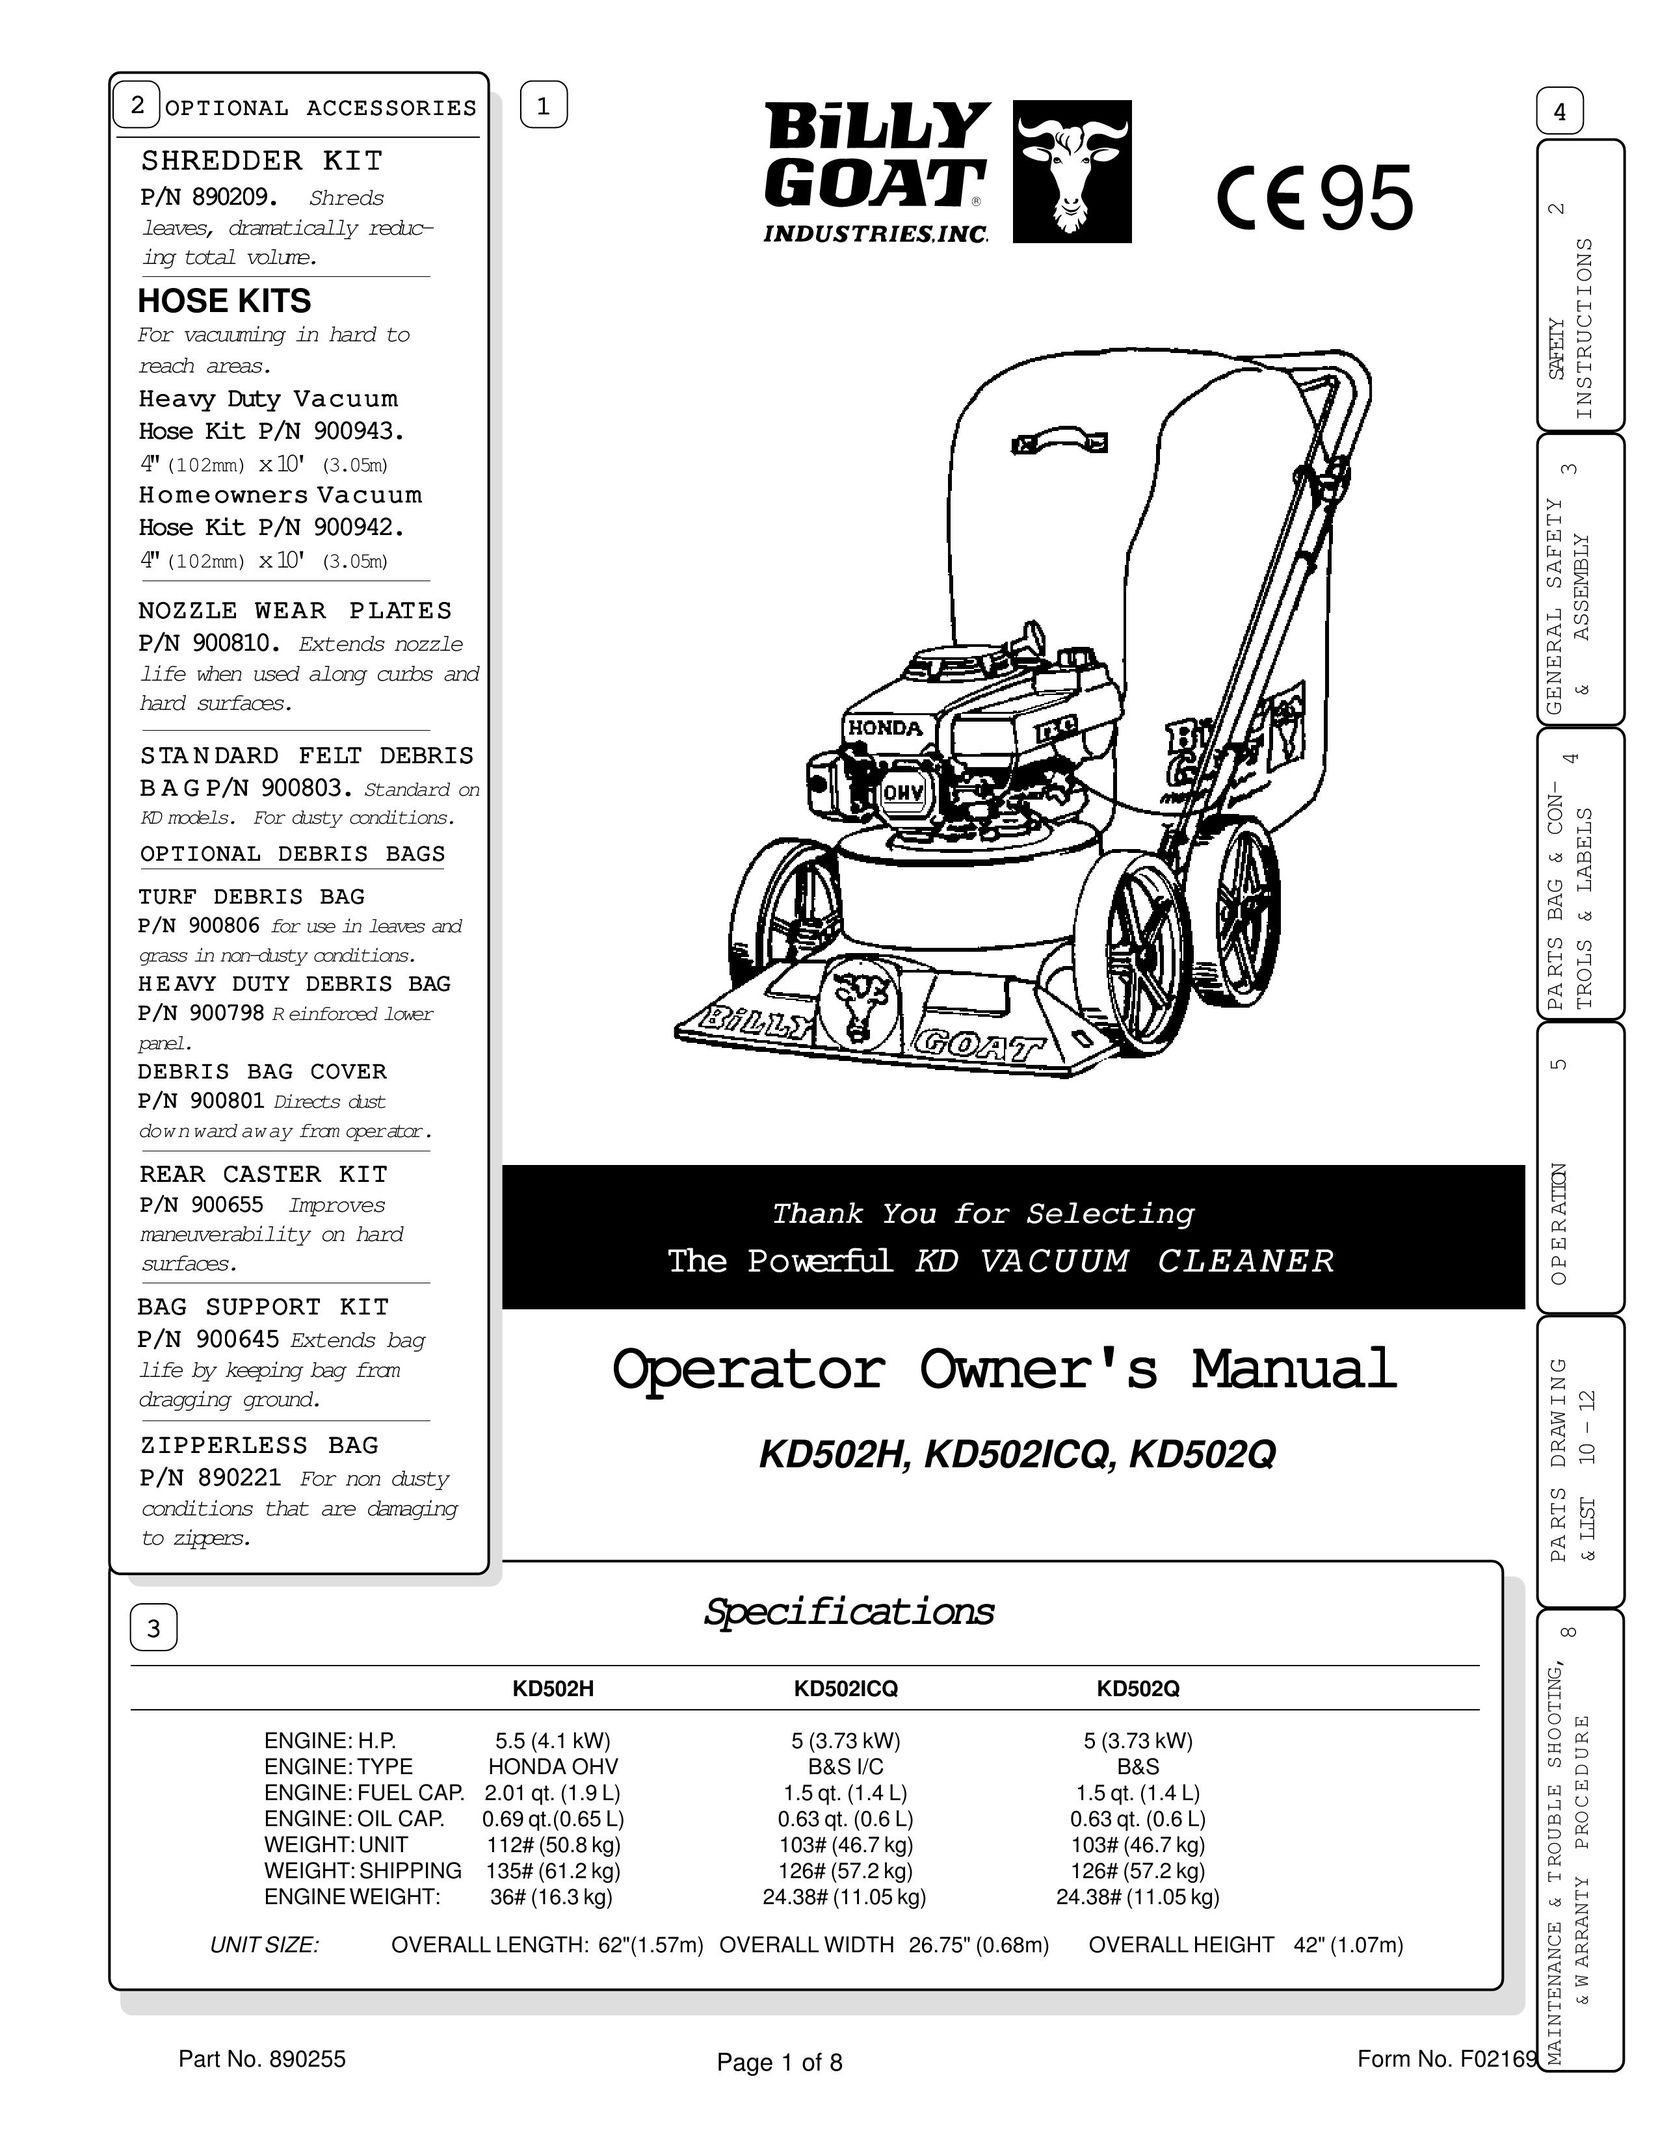 Billy Goat KD502Q Vacuum Cleaner User Manual